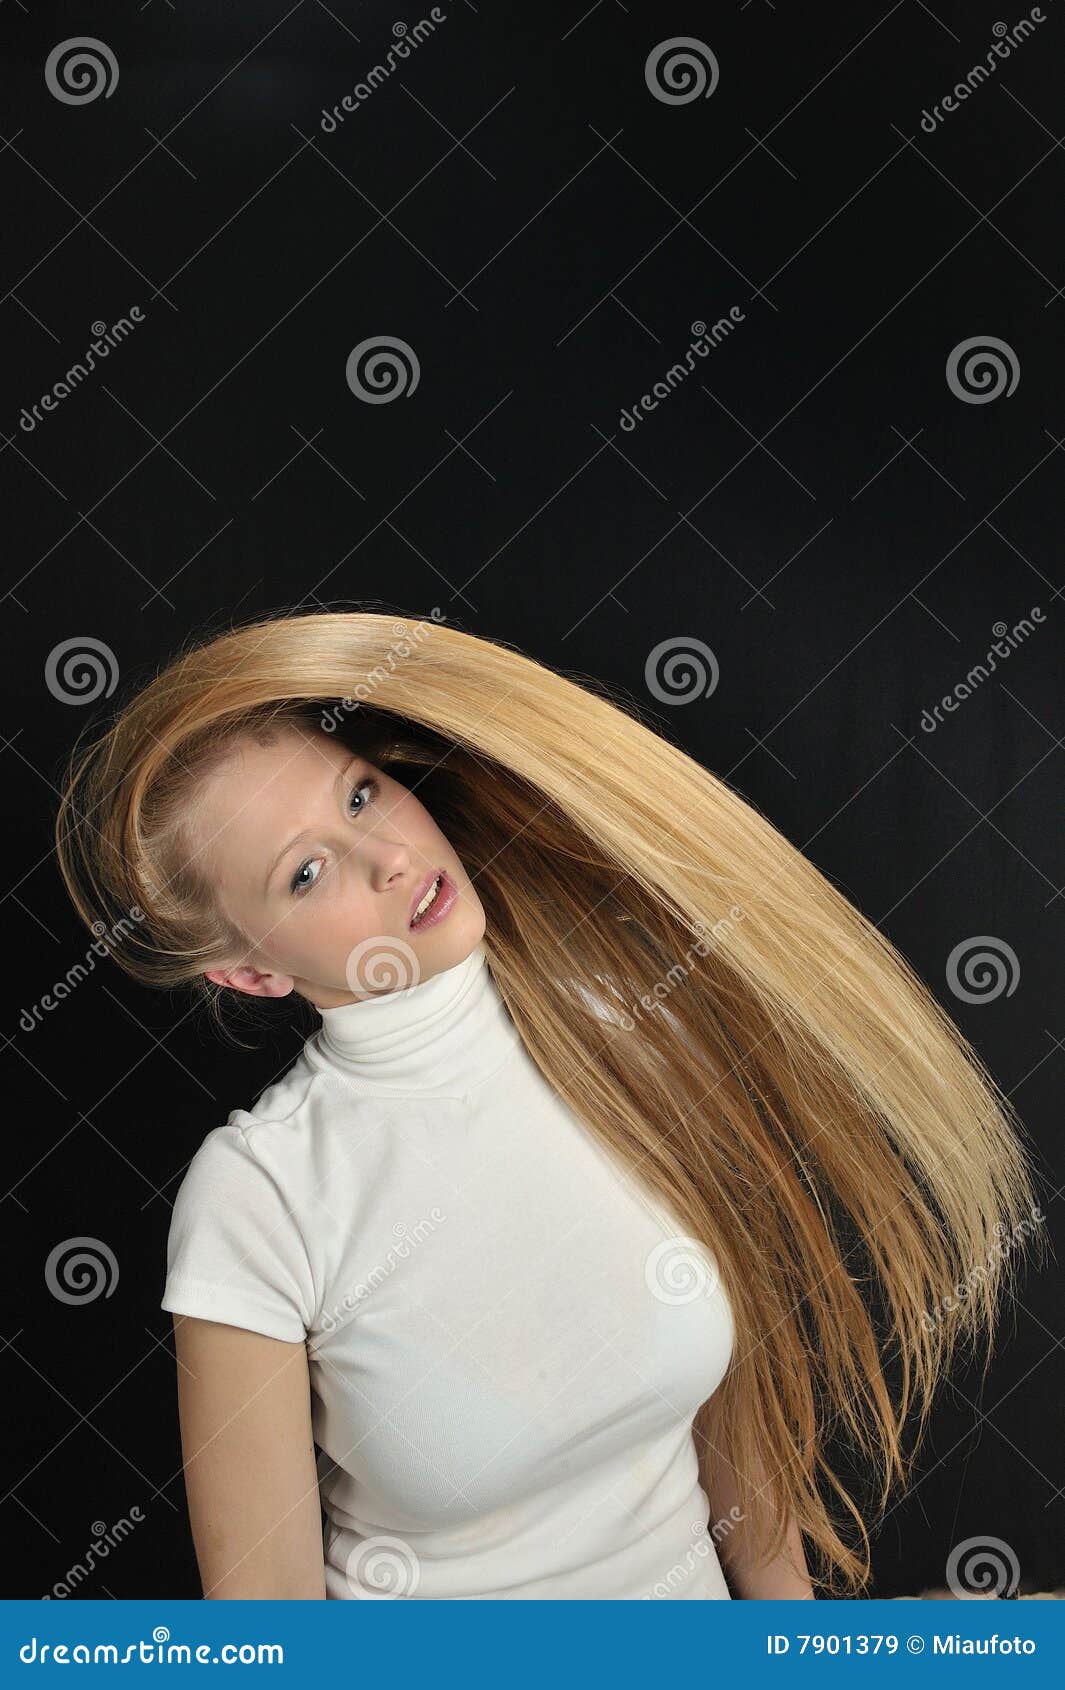 Blond Long Hair Teen Age Girl Stock Image Image Of Eyeshadow Adult